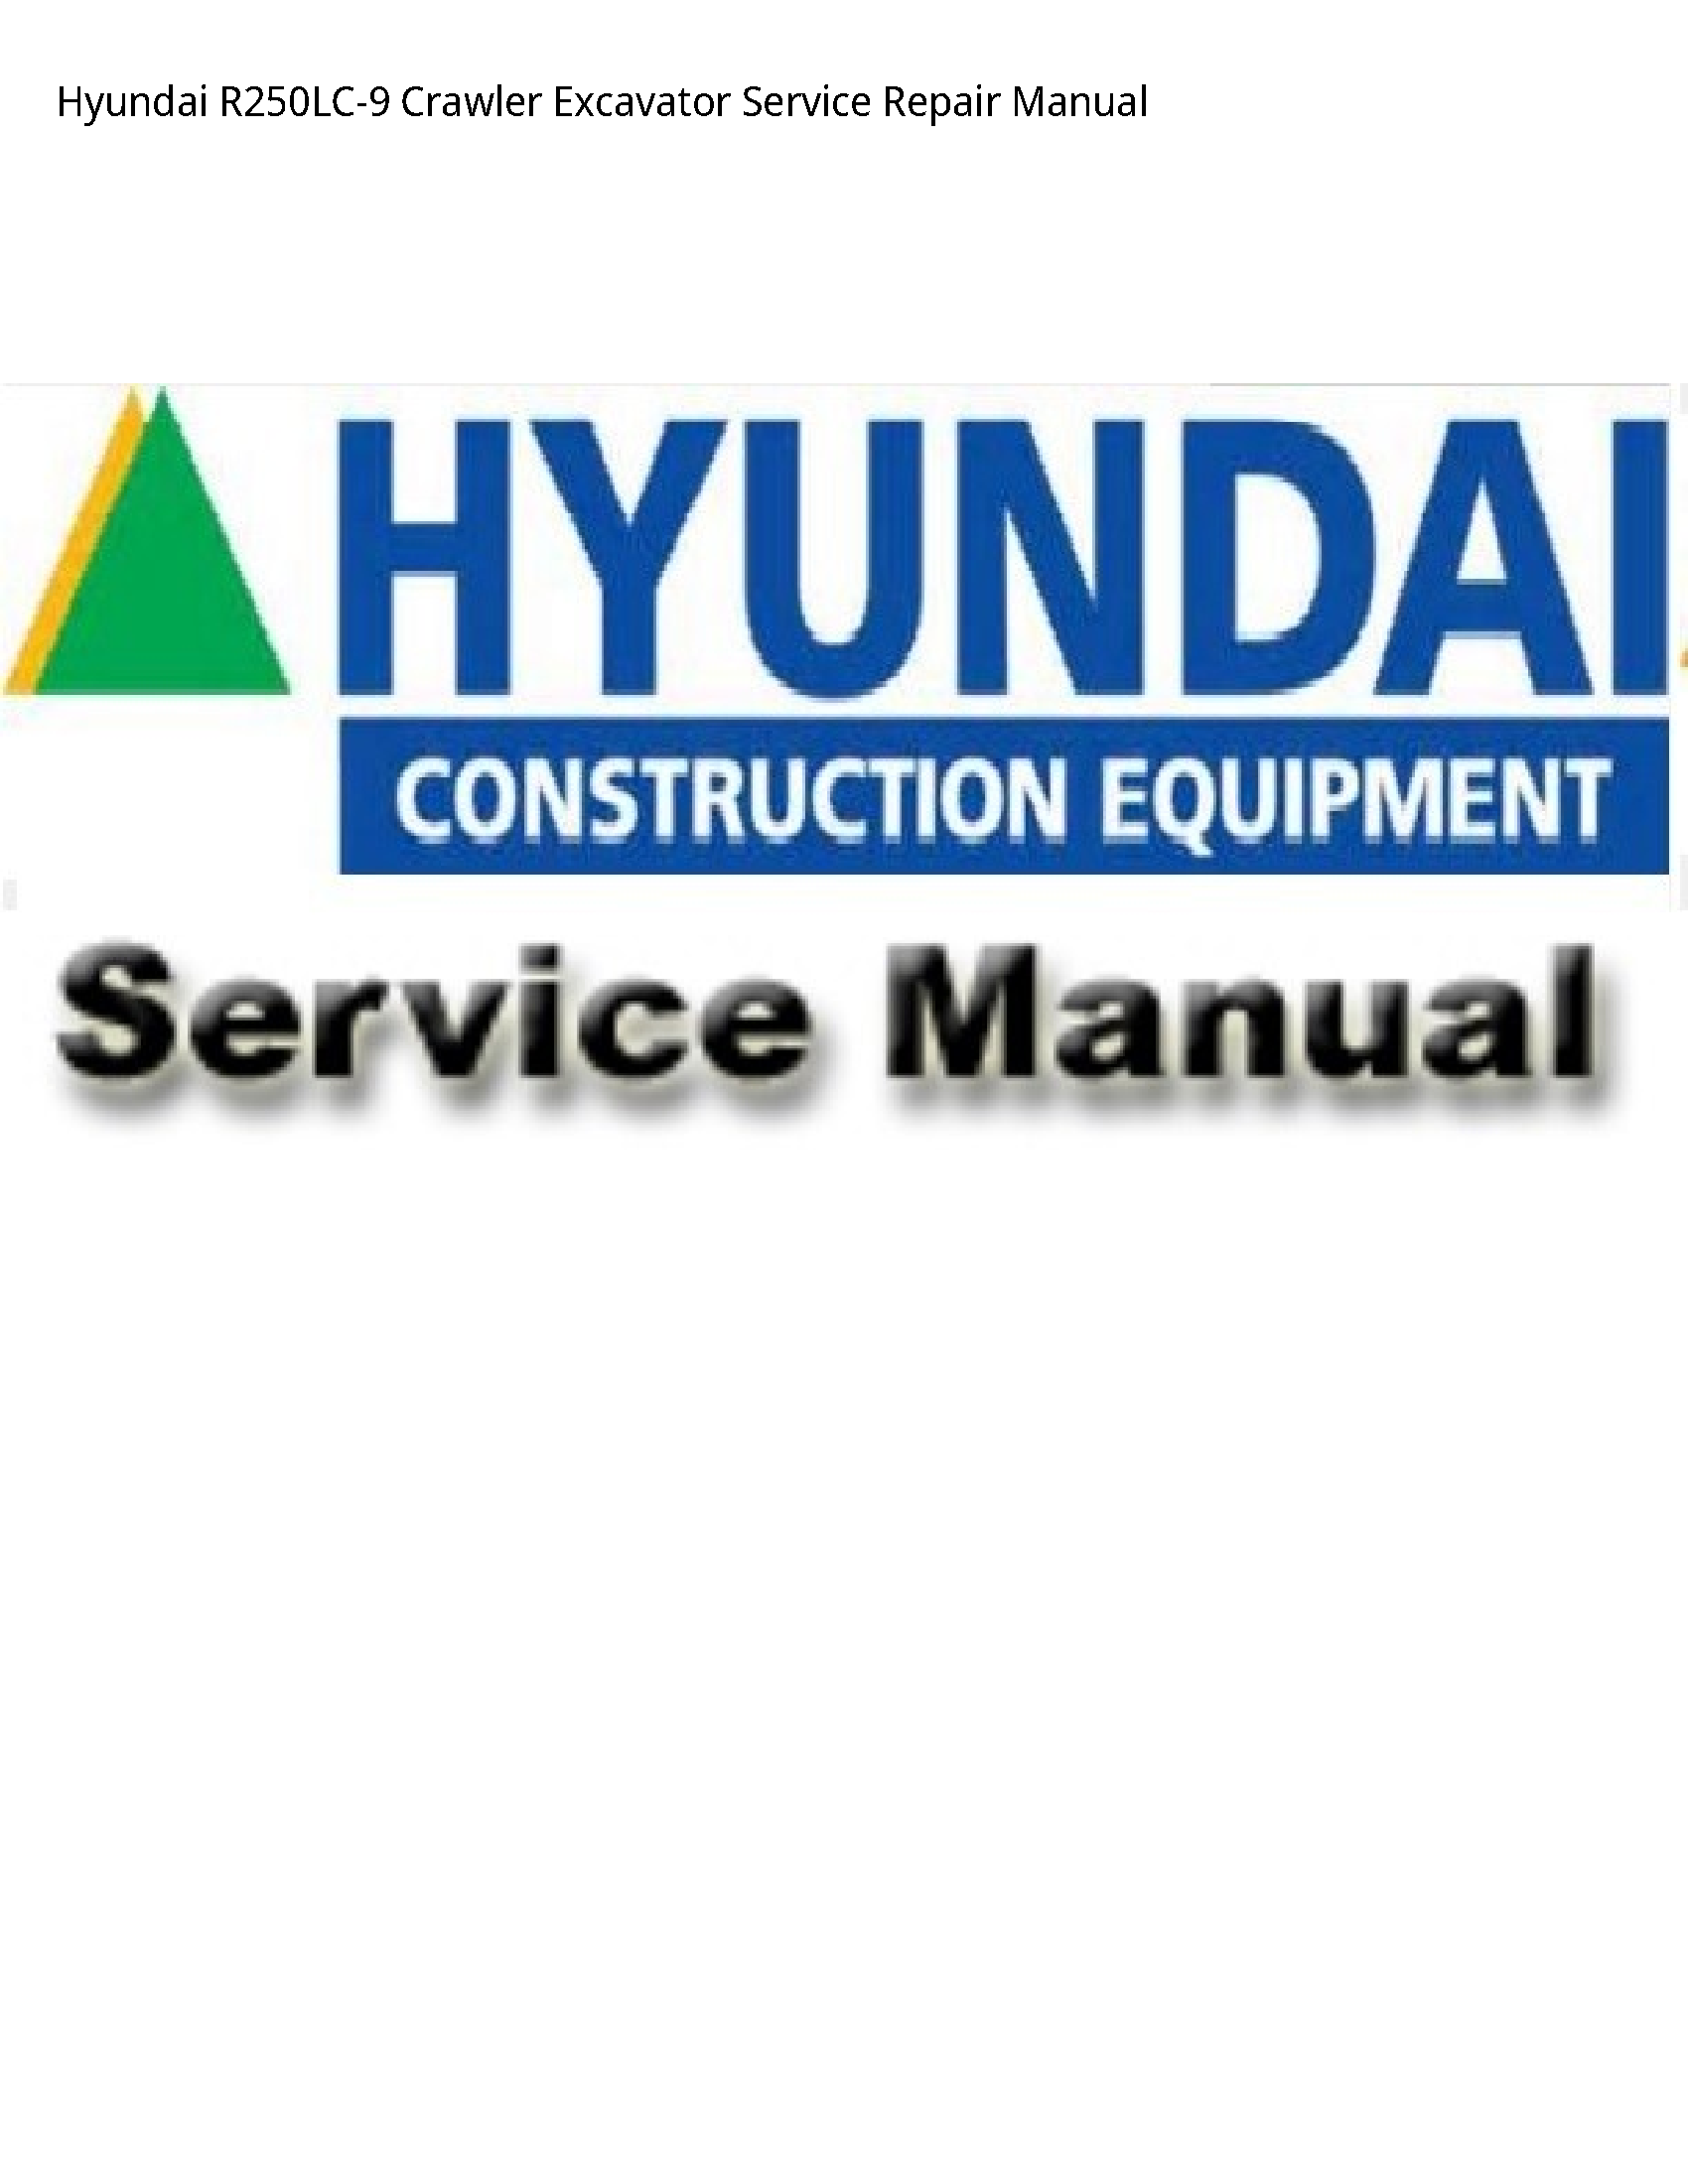 Hyundai R250LC-9 Crawler Excavator manual